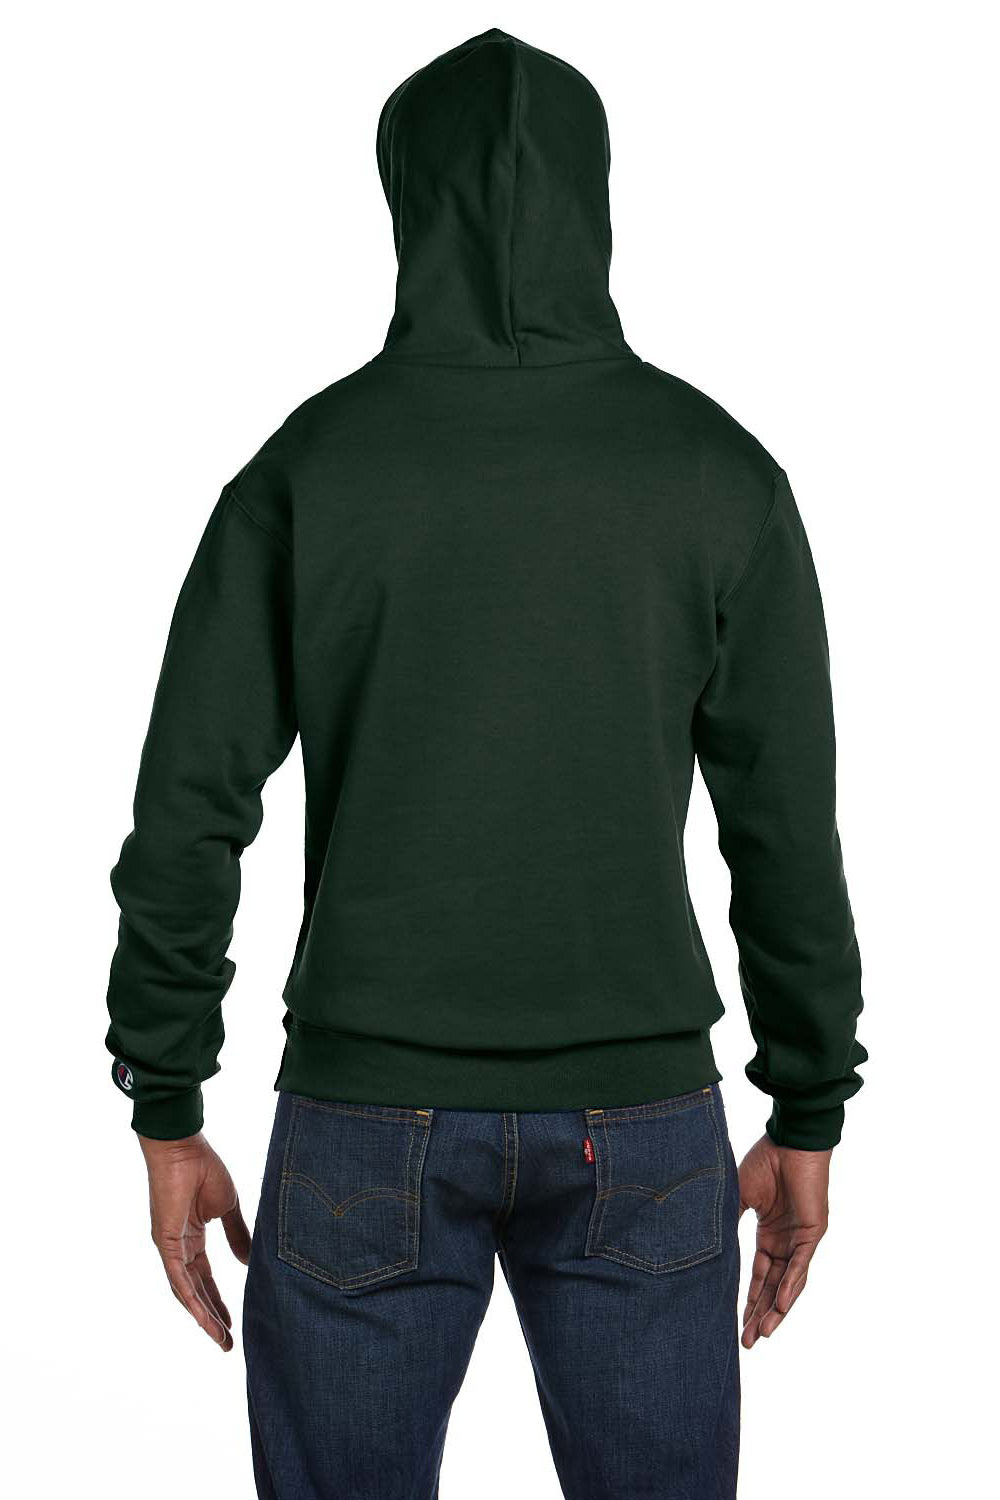 Hoodie S700 Eco Hooded Moisture Mens Dark Double — Green Wicking Champion Dry Sweatshirt Fleece